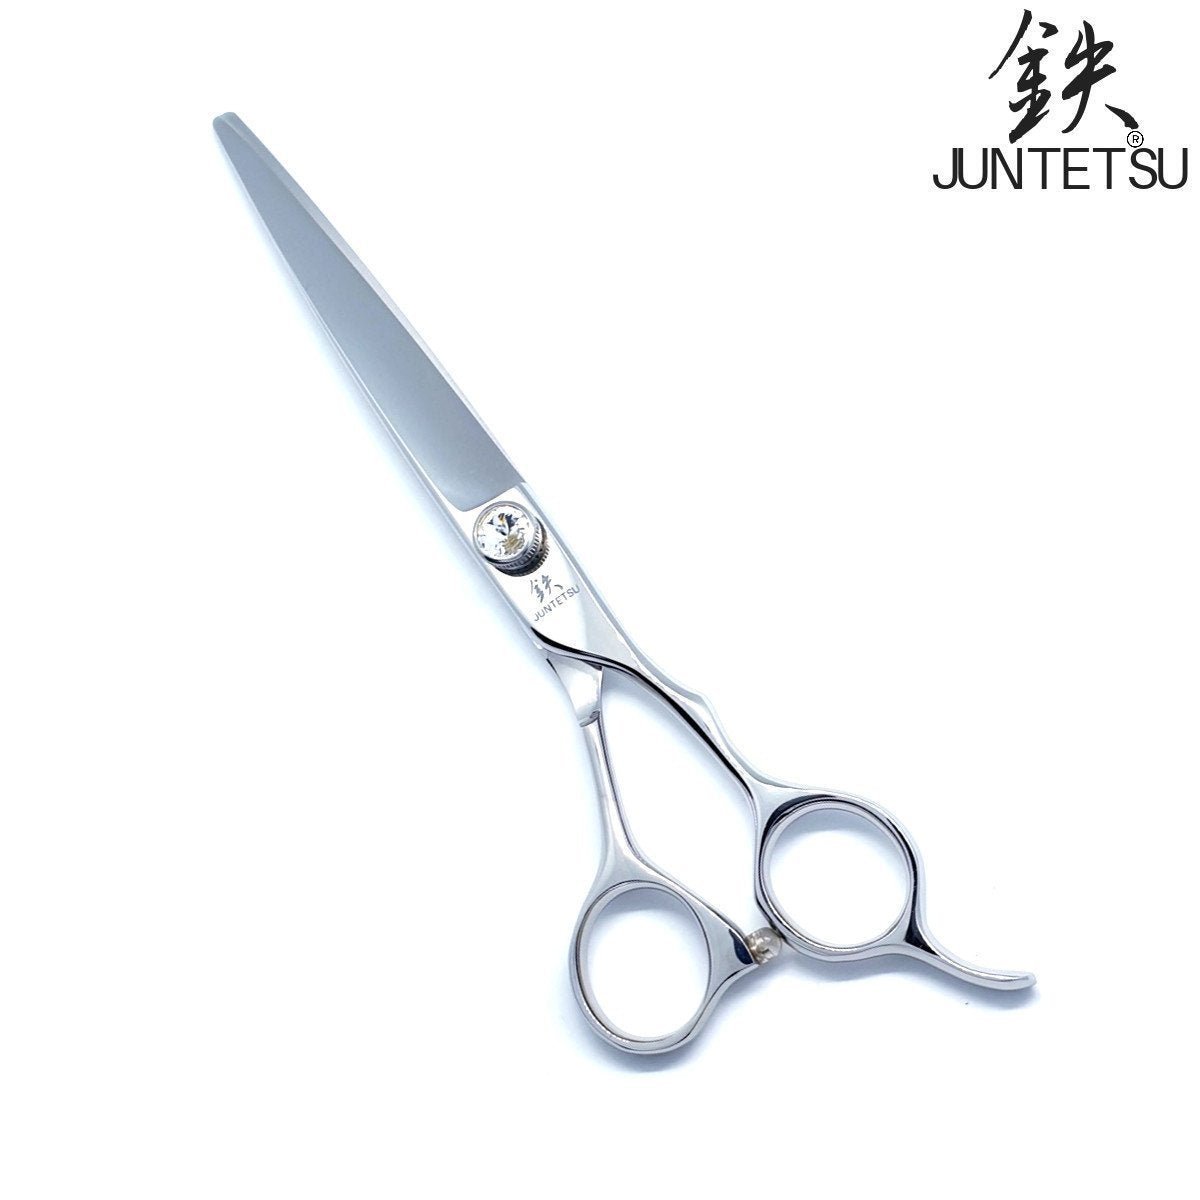 Juntetsu Snow Professional Barber Shears - Japan Scissors USA